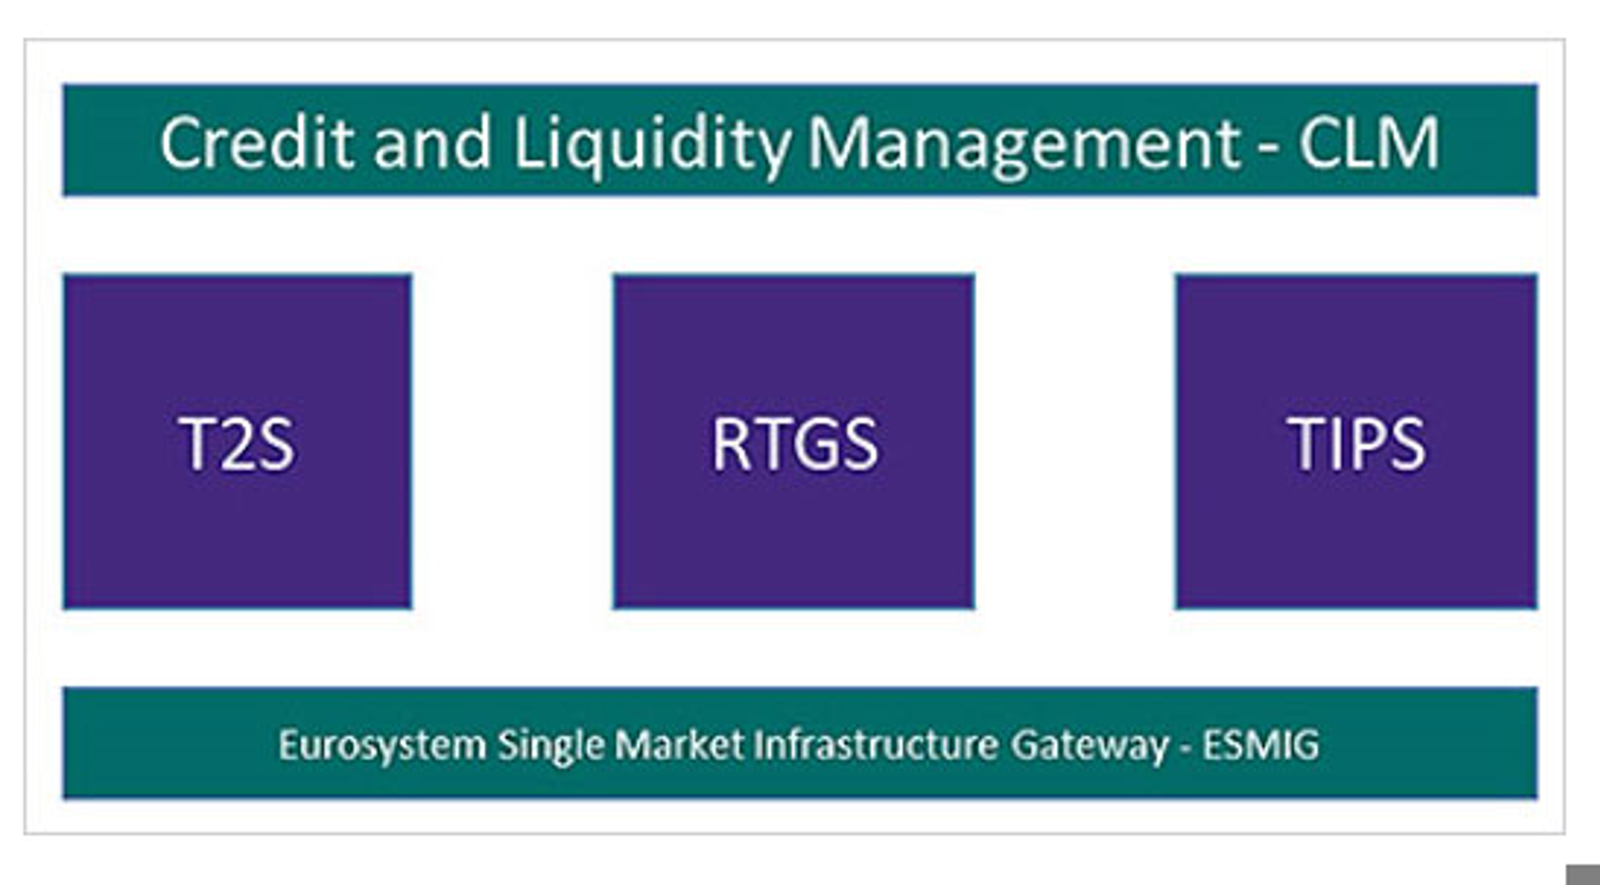 Credit and Liquidity Management - CLM